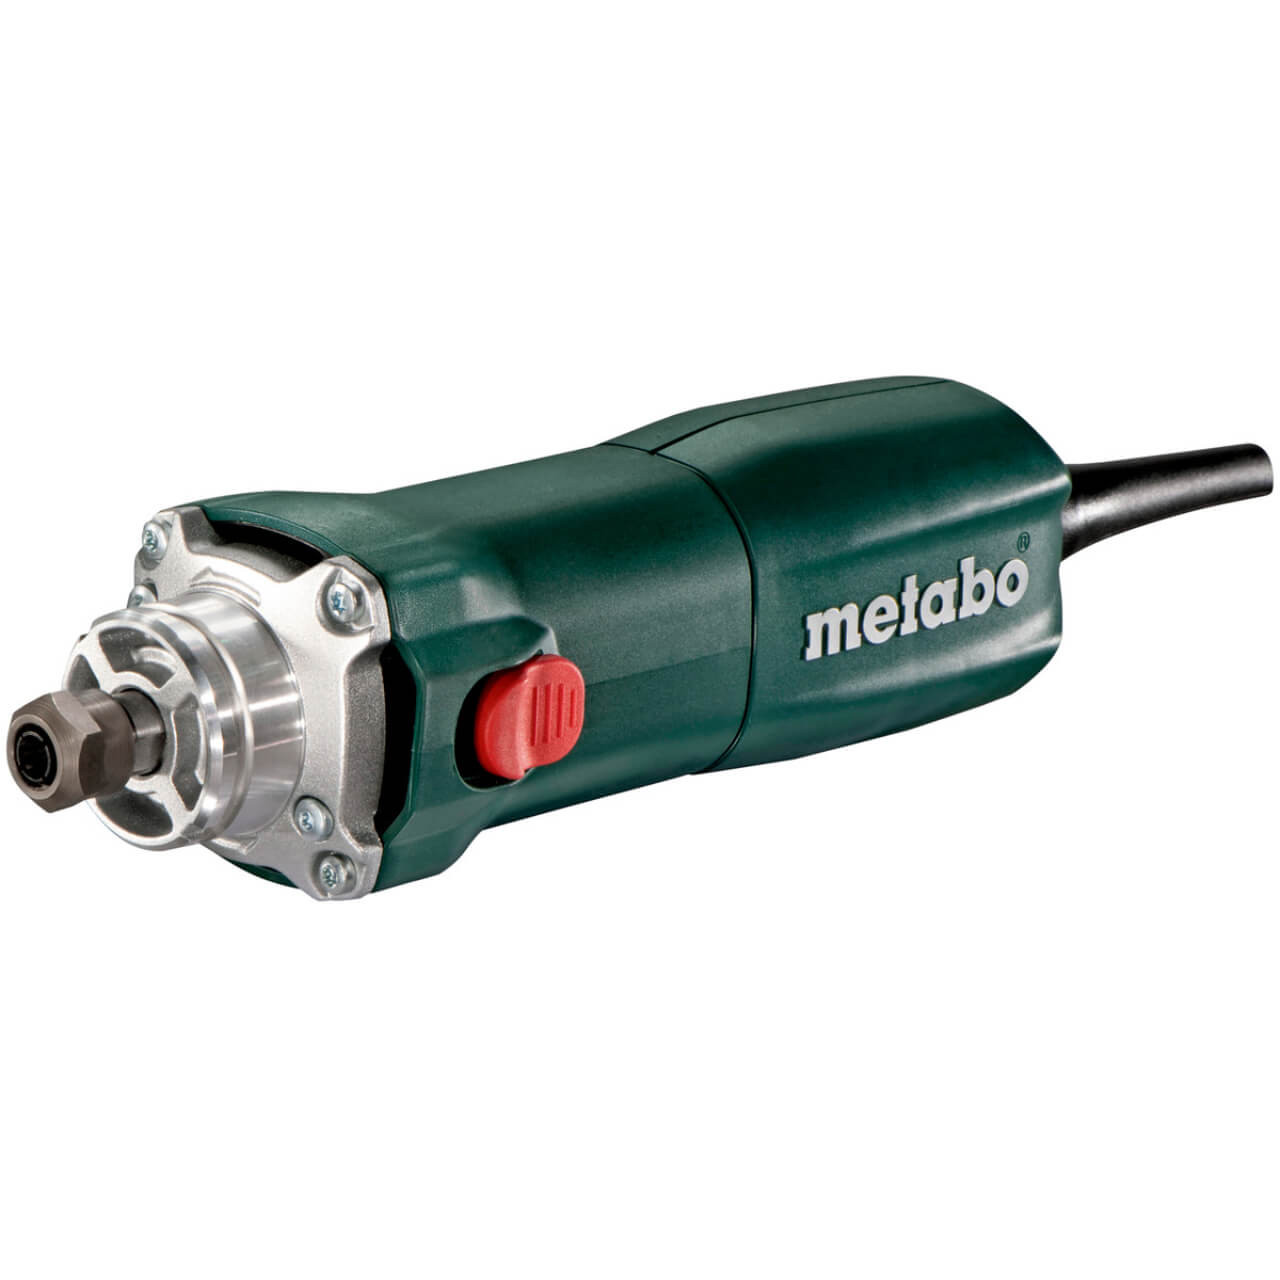 Metabo GE 710 COMPACT Die Grinder 710W 1/4” Collett 13,000-34,000 rpm (Short Spindle)